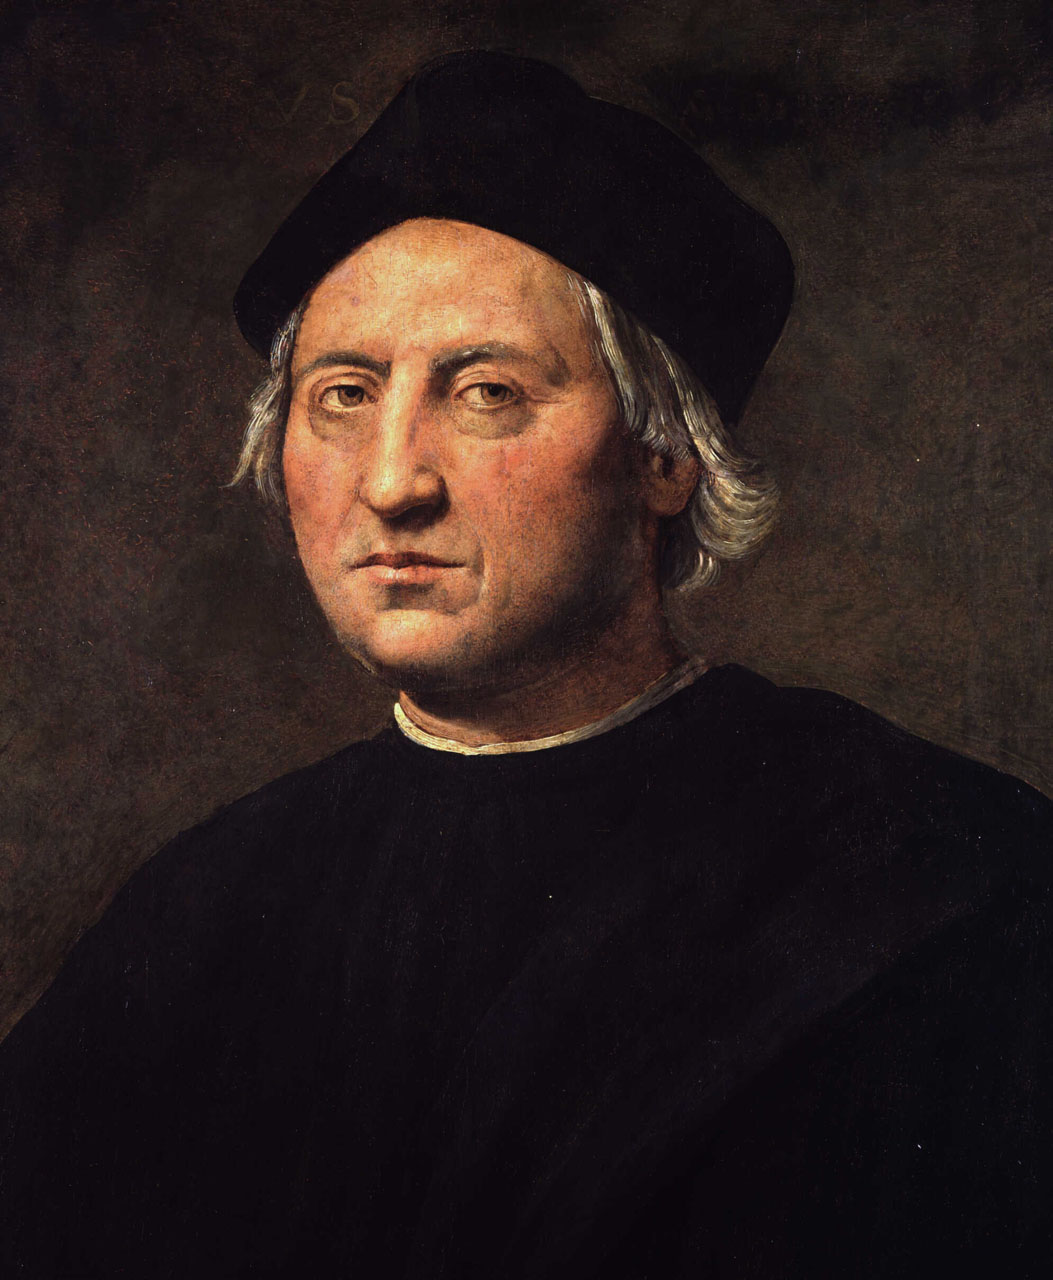 Ghirlandaio, attributed, "The Portrait of Christopher Columbus"